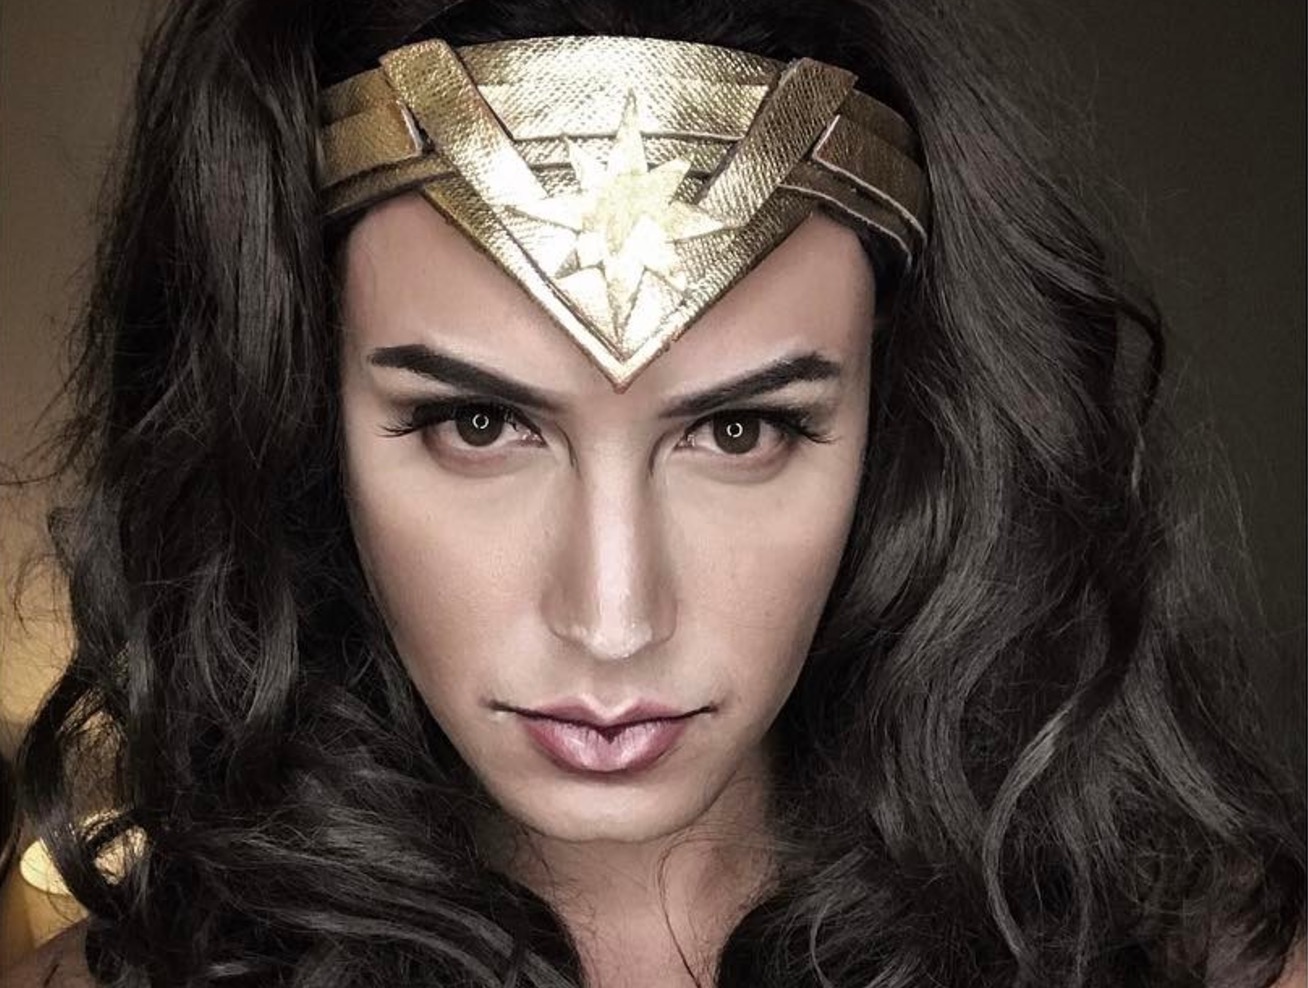 Paolo Ballesteros as Wonder Woman. PHOTO: Instagram/Paolo Ballesteros